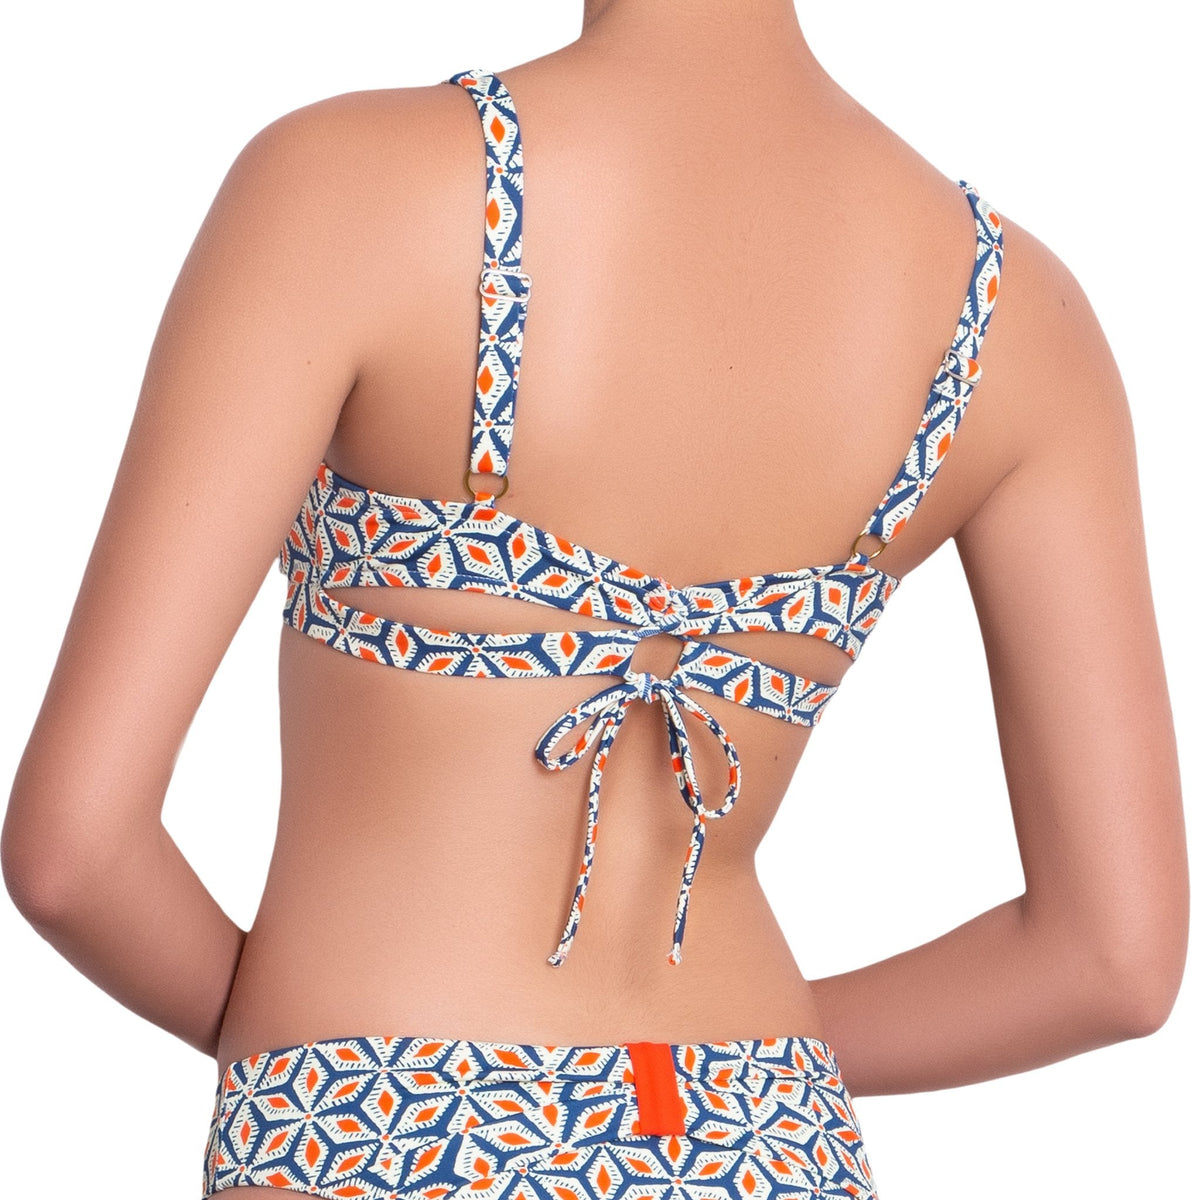 B√âR√âNICE bralette bra, printed bikini top by ALMA swimwear ‚Äì back view view 